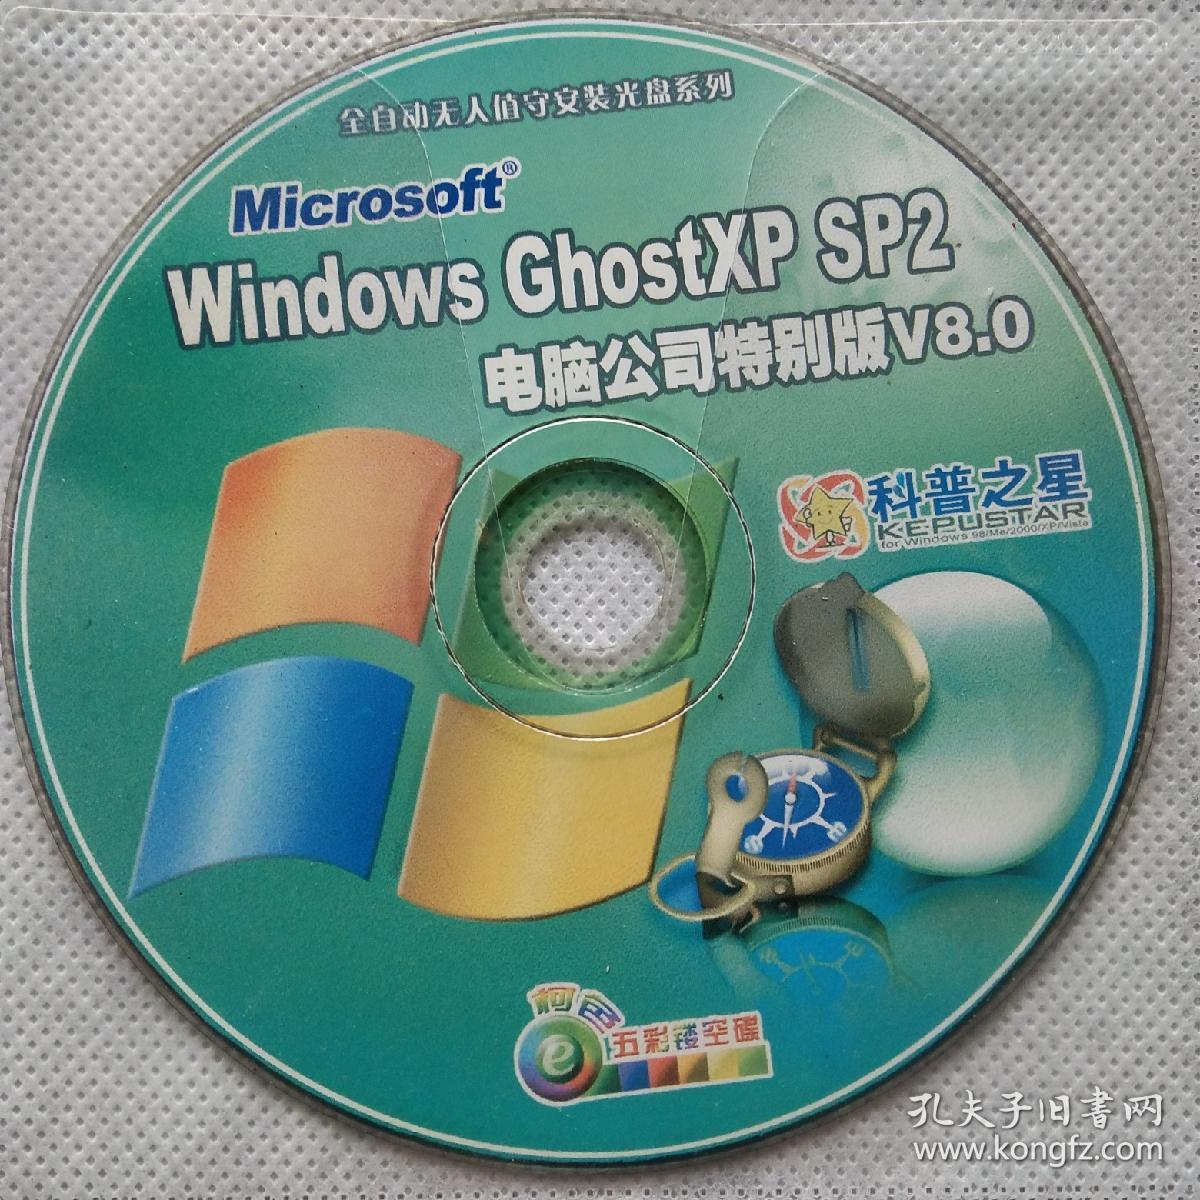 Windows GlostXP SP2 电脑公司特别版V8.0